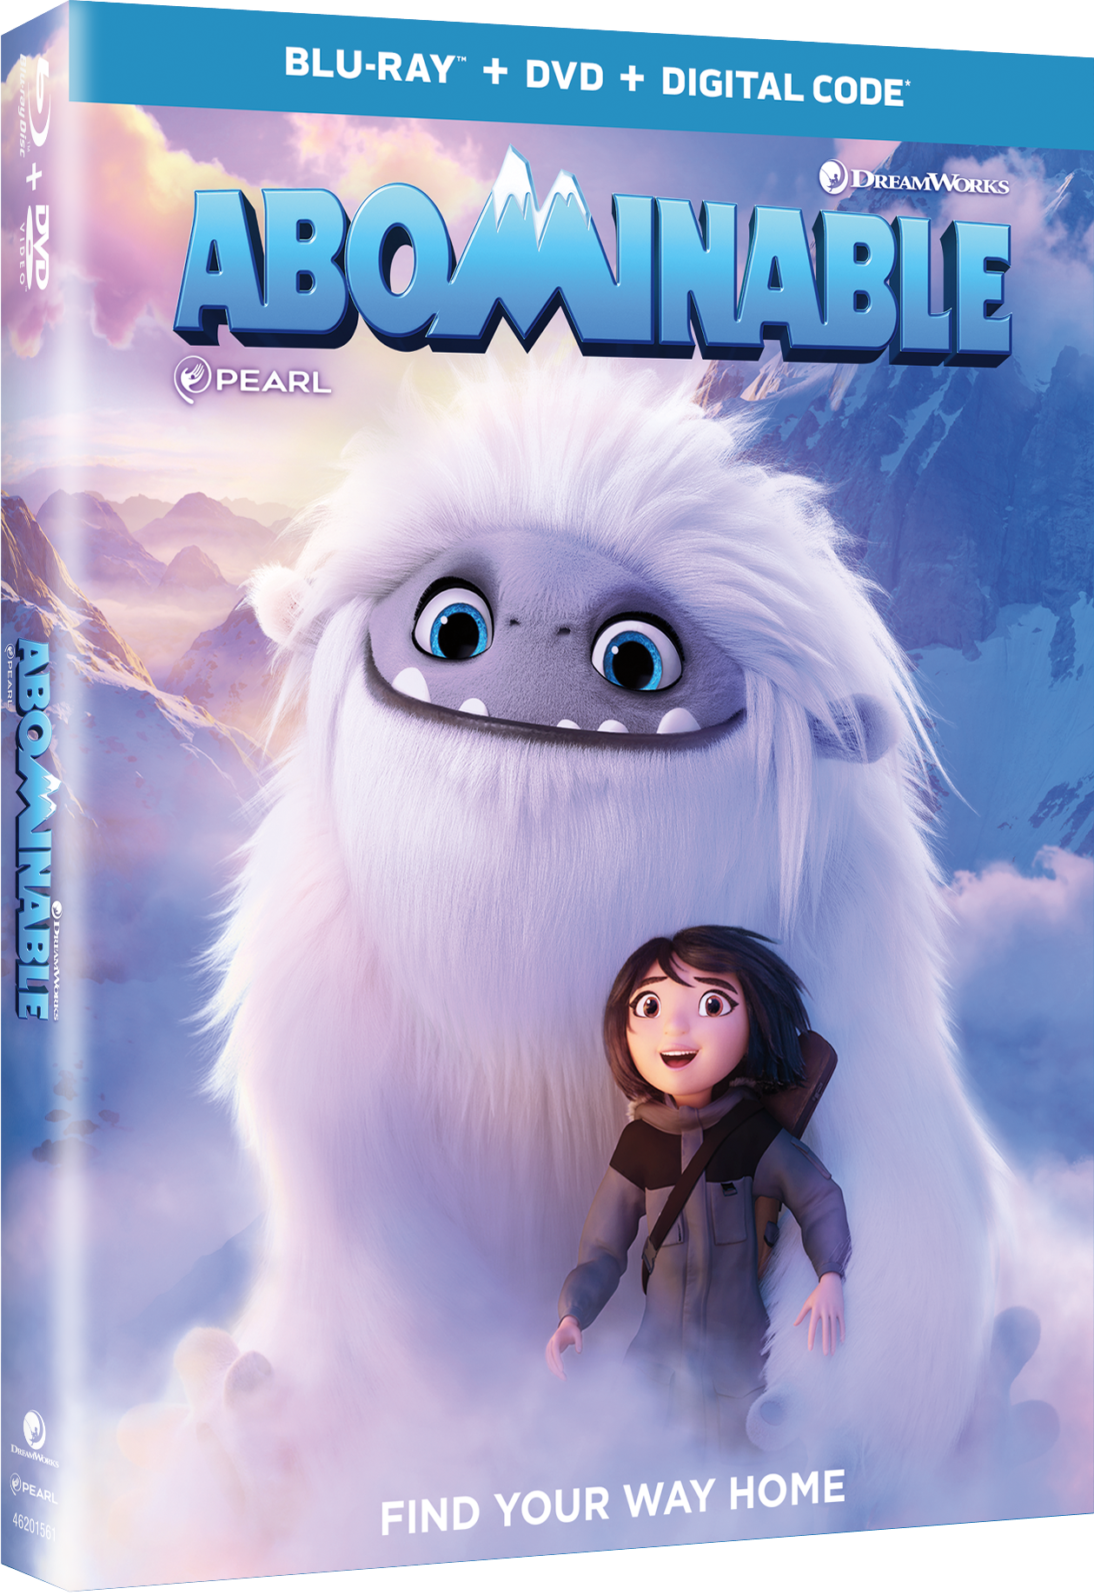 Abominable on Blu-ray, DVD & Digital